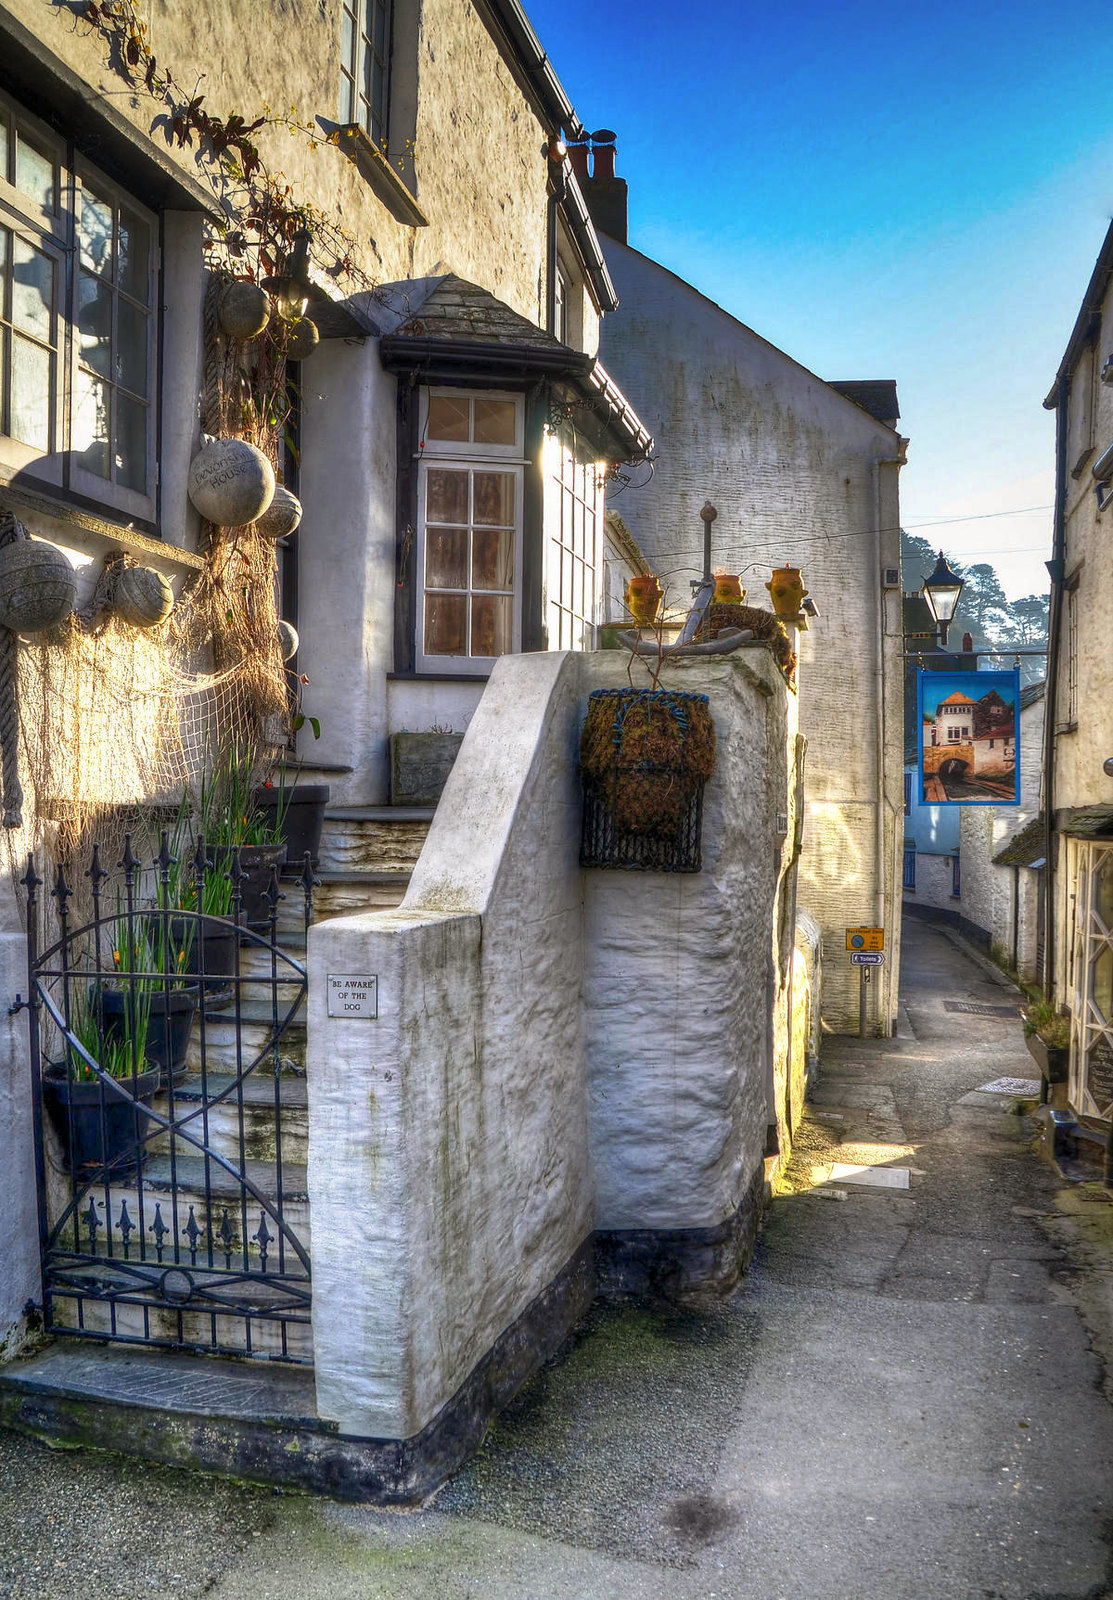 Fisherman's cottage, Polperro, Cornwall. Credit Baz Richardson, flickr